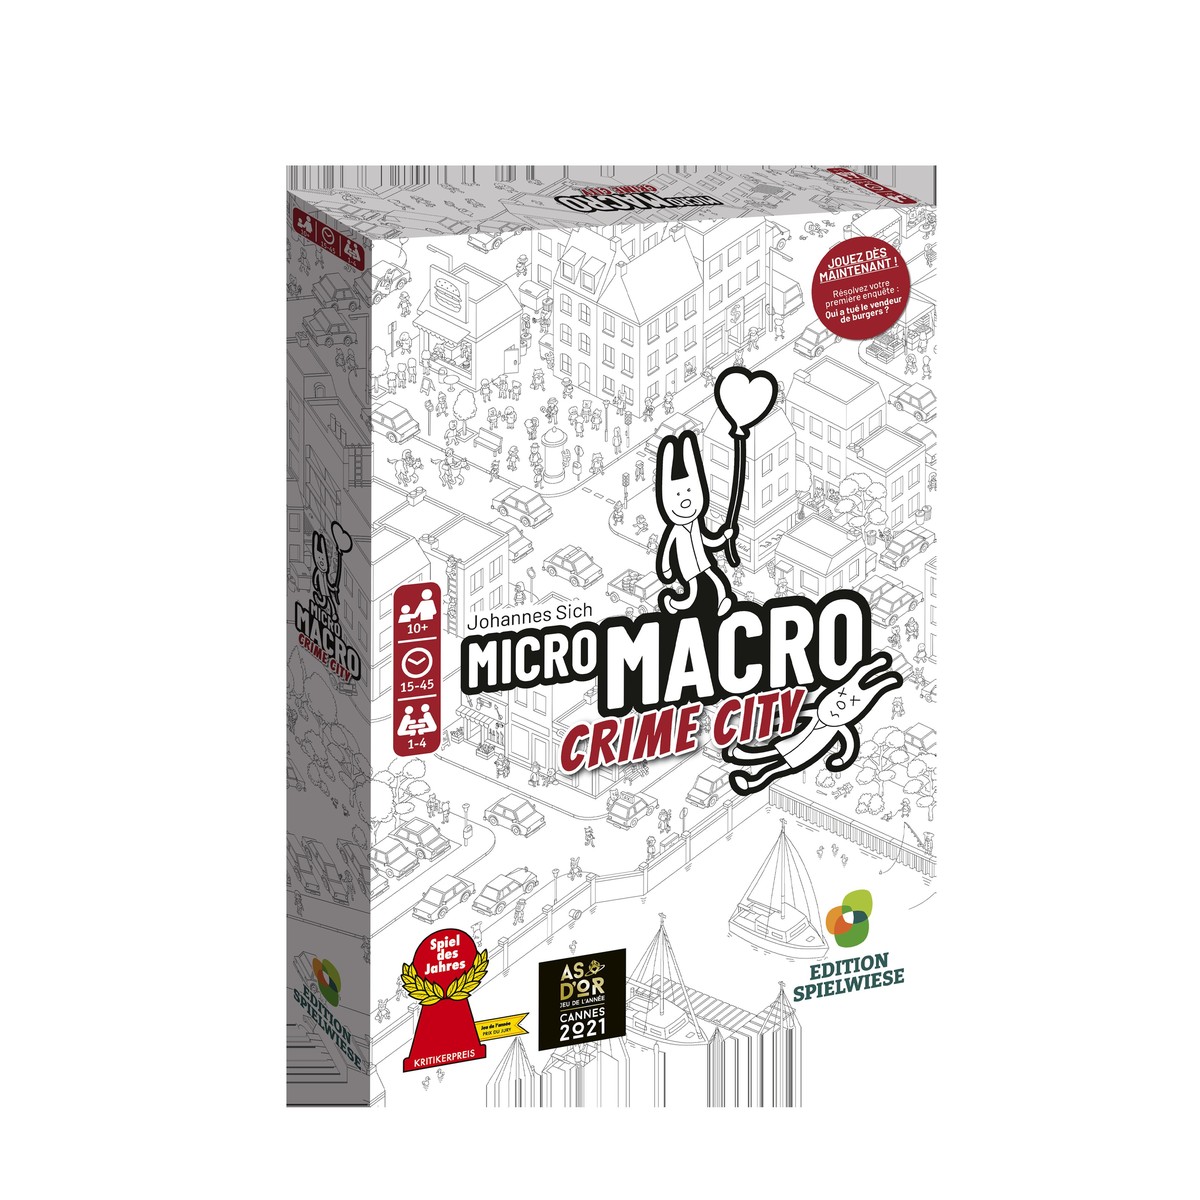   Micro Macro - Crime City  